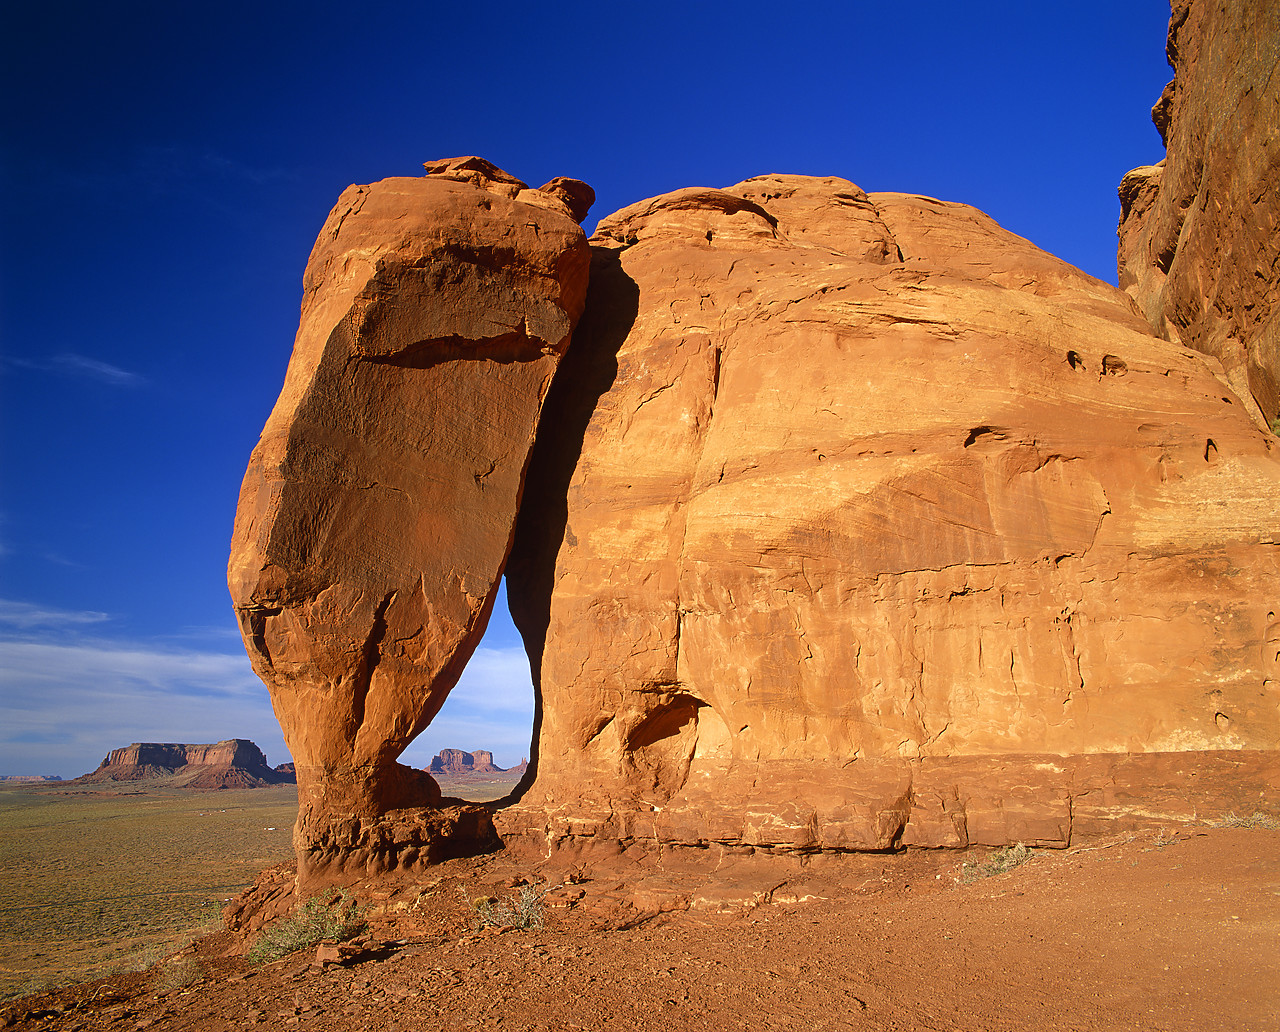 #020213-1 - Teardrop Arch, Monument Valley, Arizona, USA